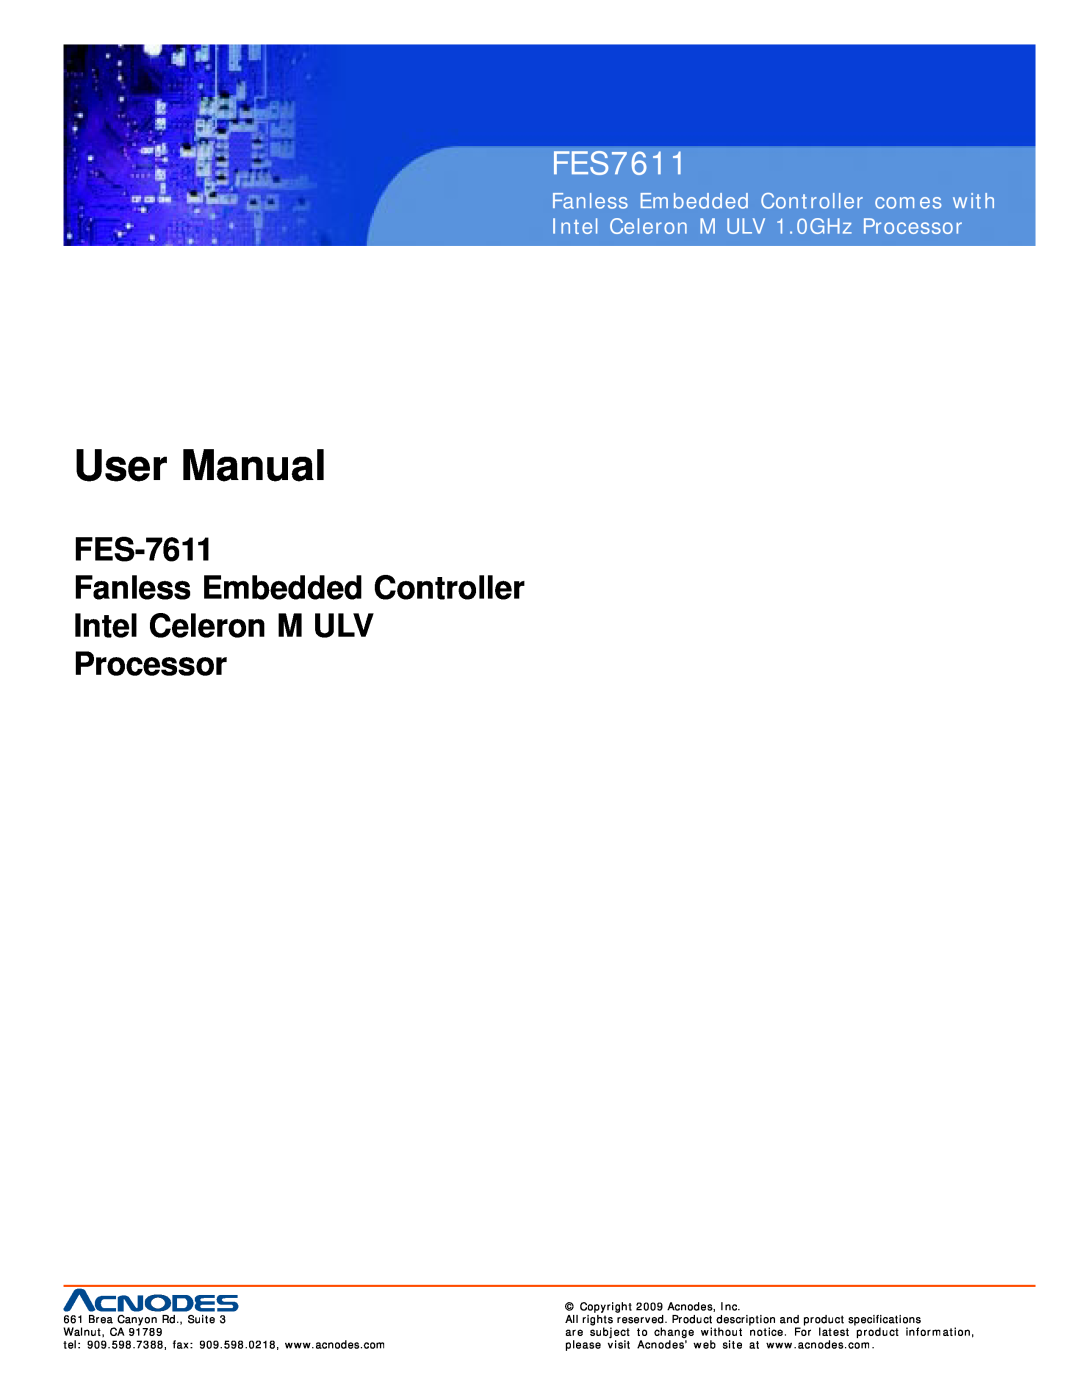 Acnodes FES7611 user manual FES-7611 Fanless Embedded Controller Intel Celeron M ULV Processor, User Manual, Walnut, CA 